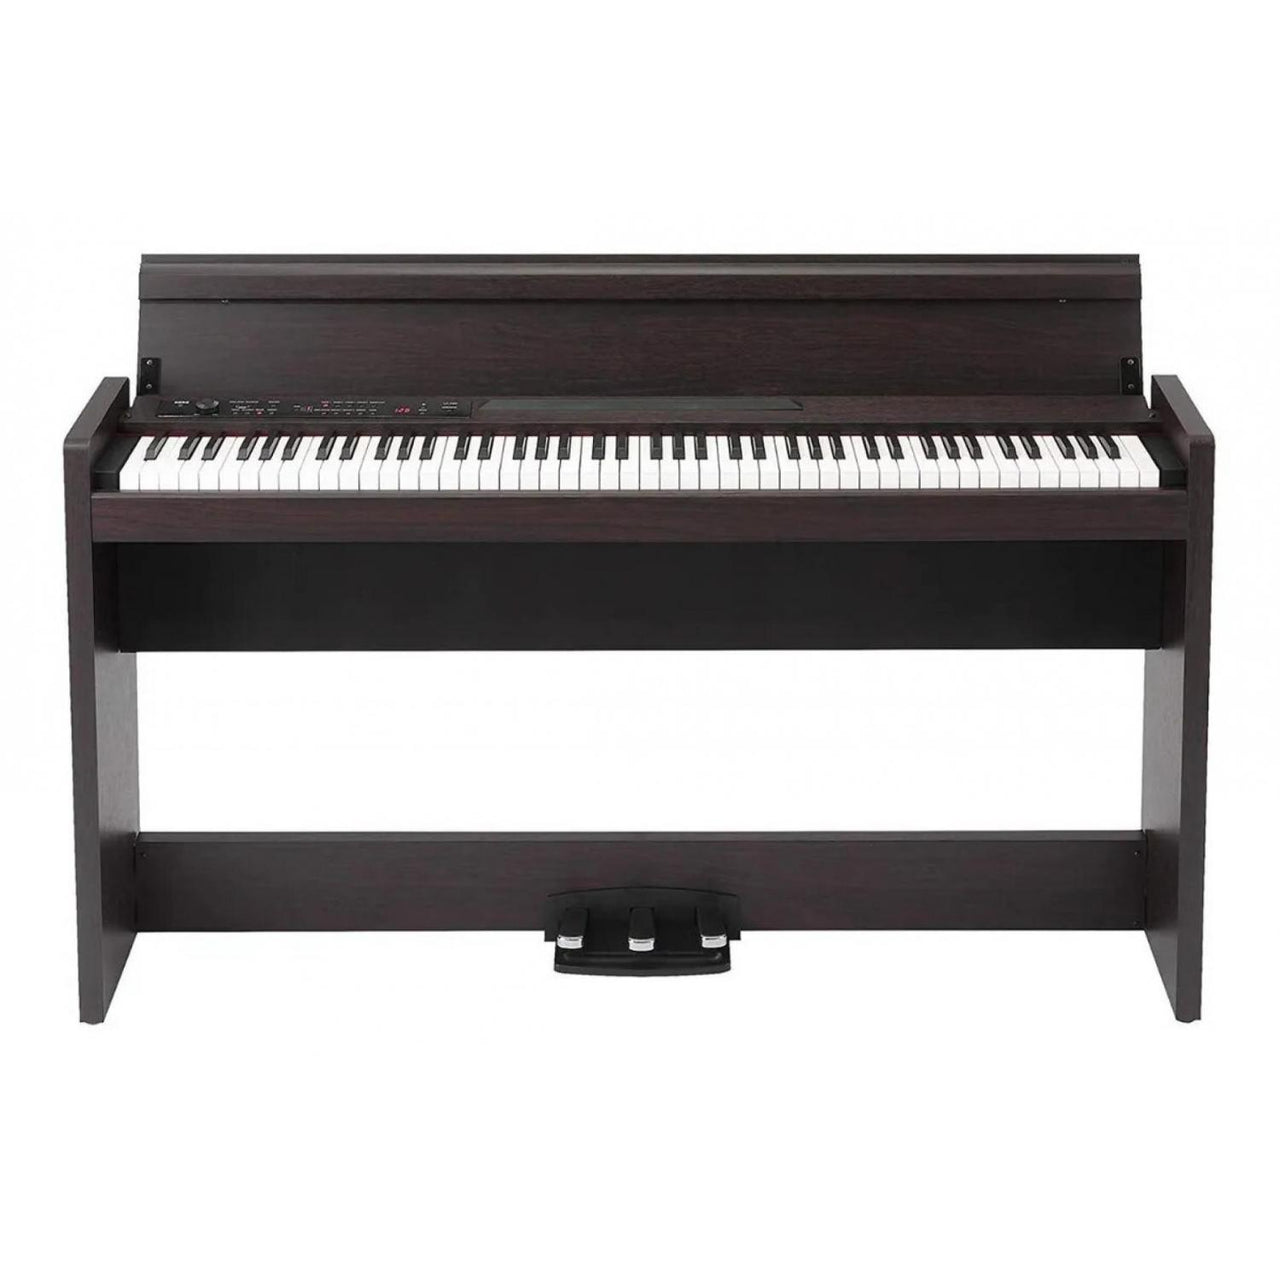 Piano Korg Lp-380 Rw Digital 88 Teclas Pesadas Rosewood